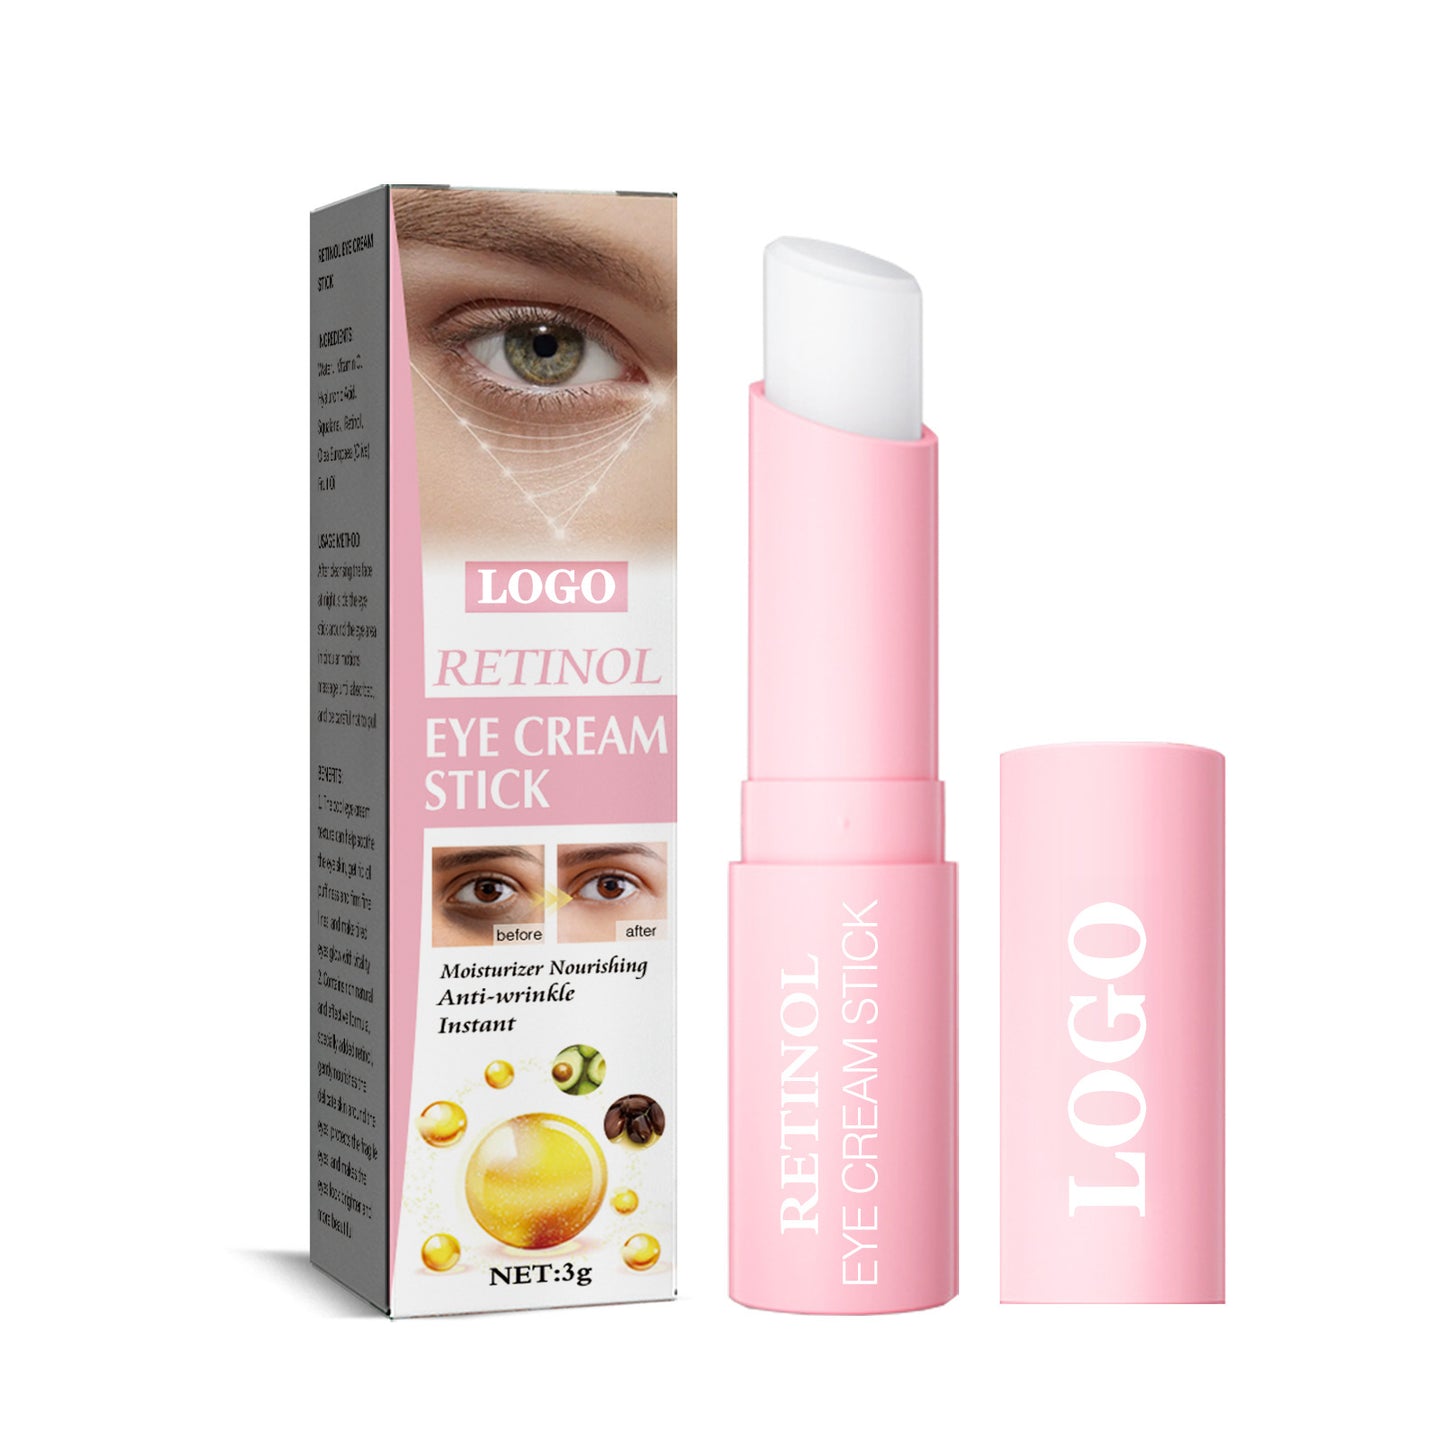 OEM Retinol Eye Cream Stick, Moisturizing and Tightening Eye Skin, Improving Fine Lines, Removing Dark Circles 406